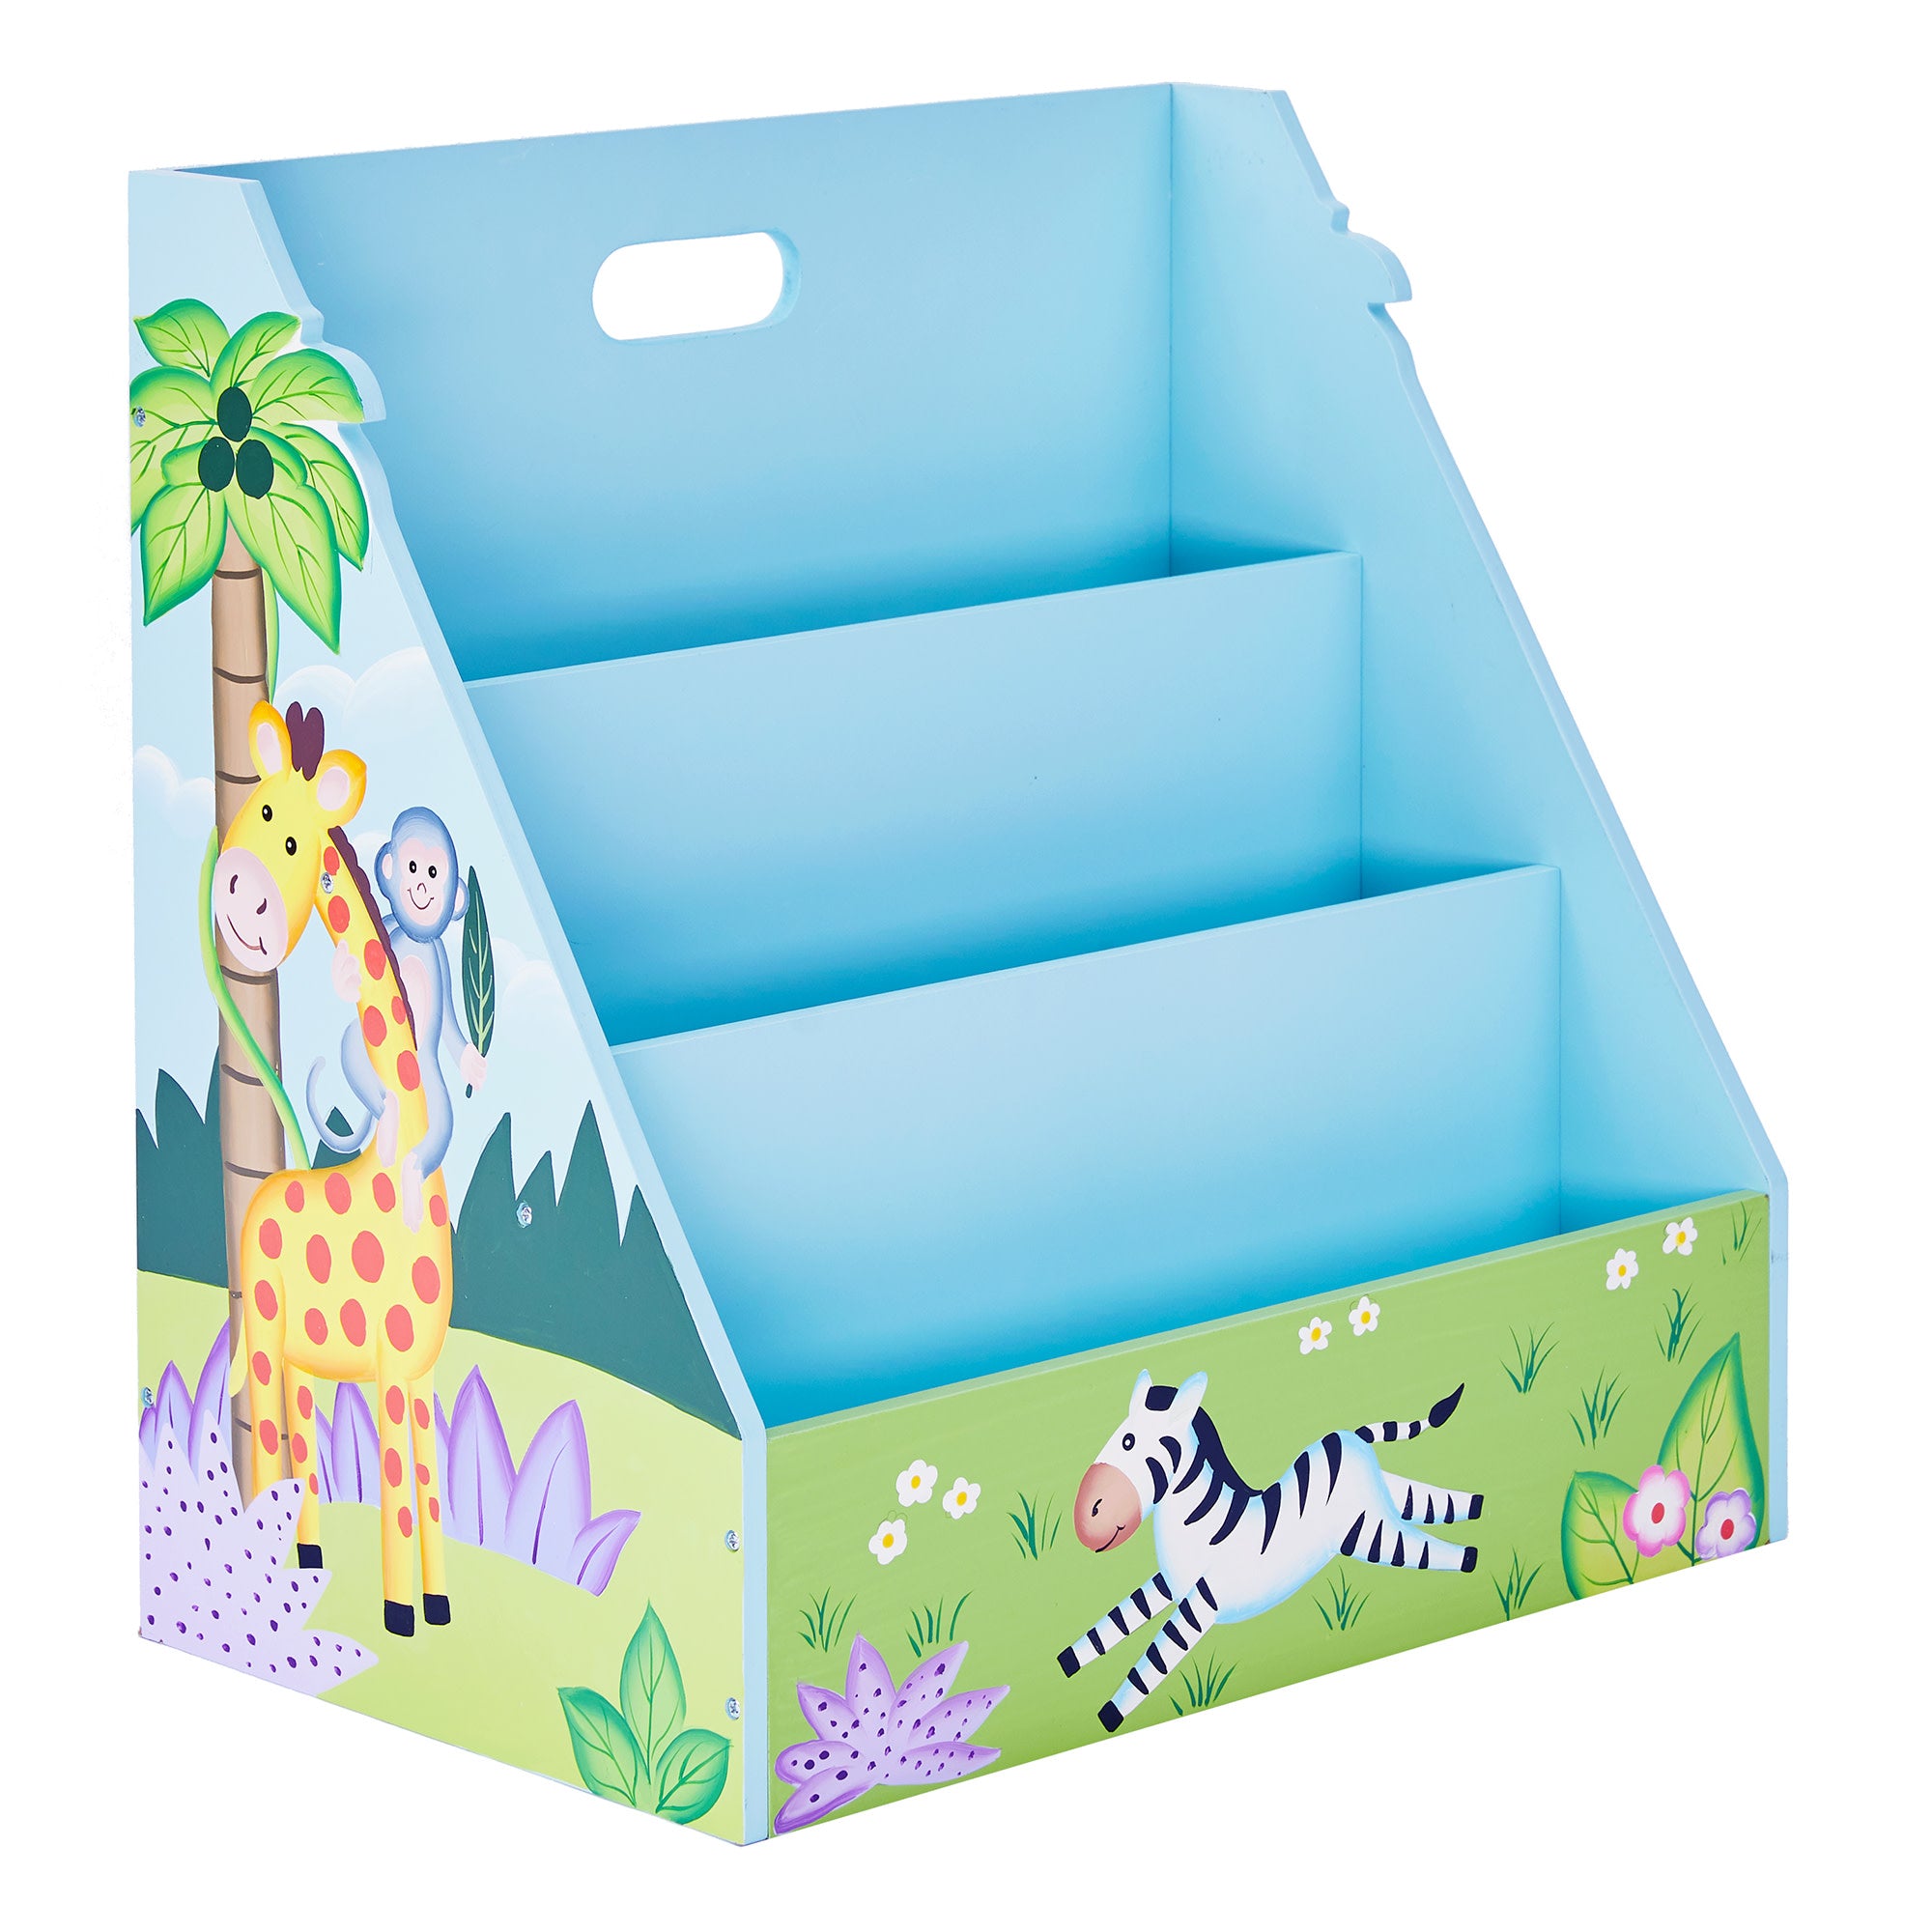 Fantasy Fields Kids Painted Wooden Sunny Safari 3-Tiered Bookshelf, Blue/Green